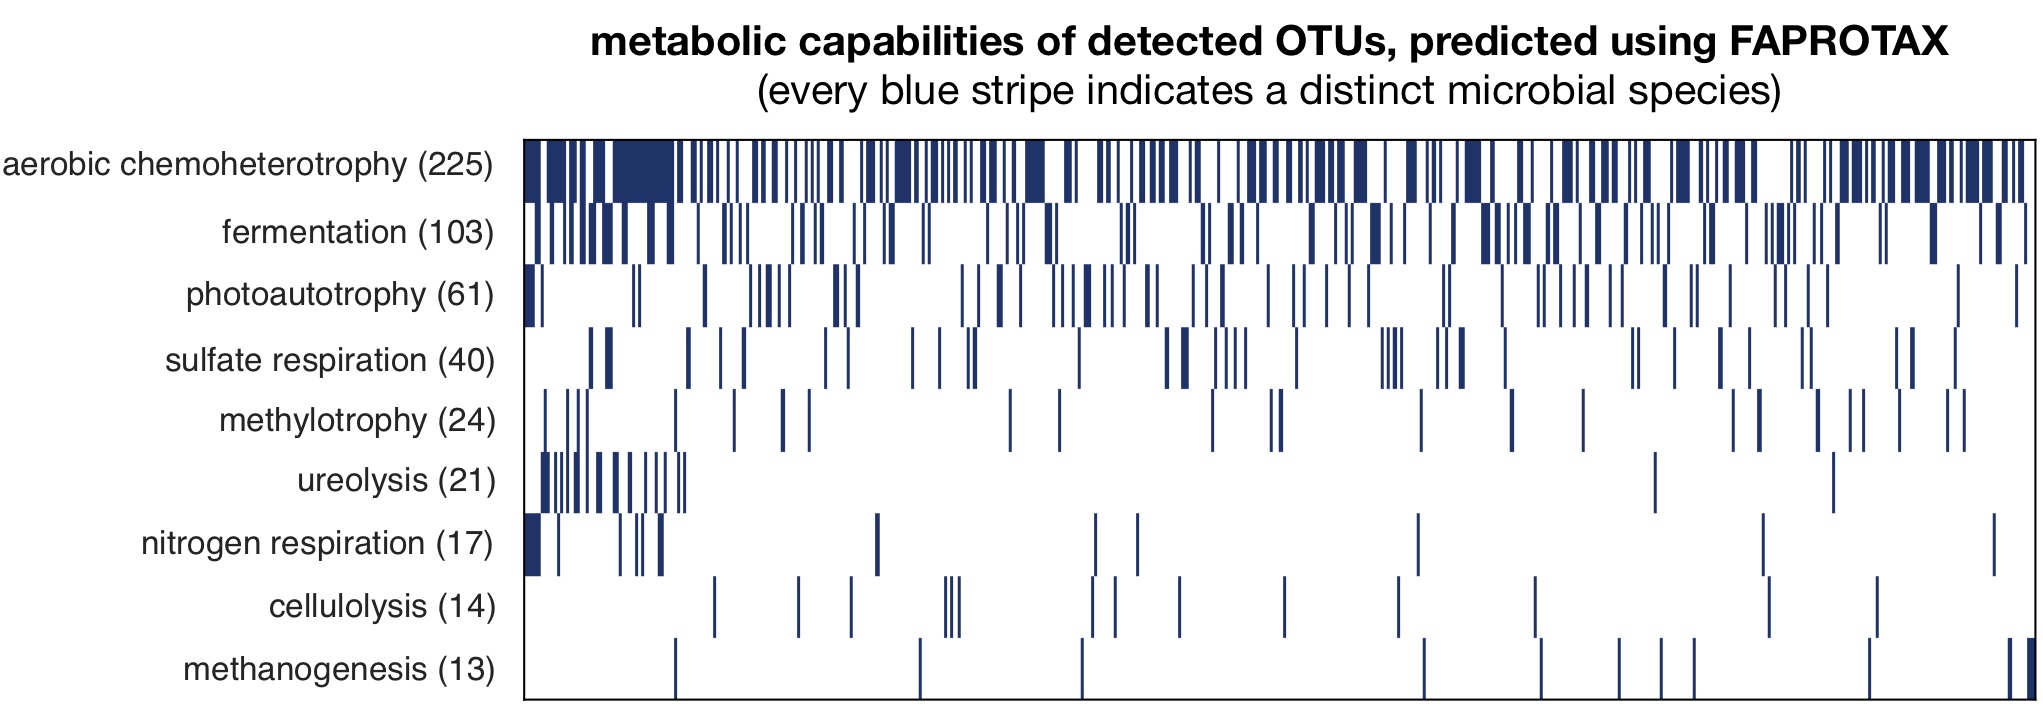 Metabolic capabilities of OTUs